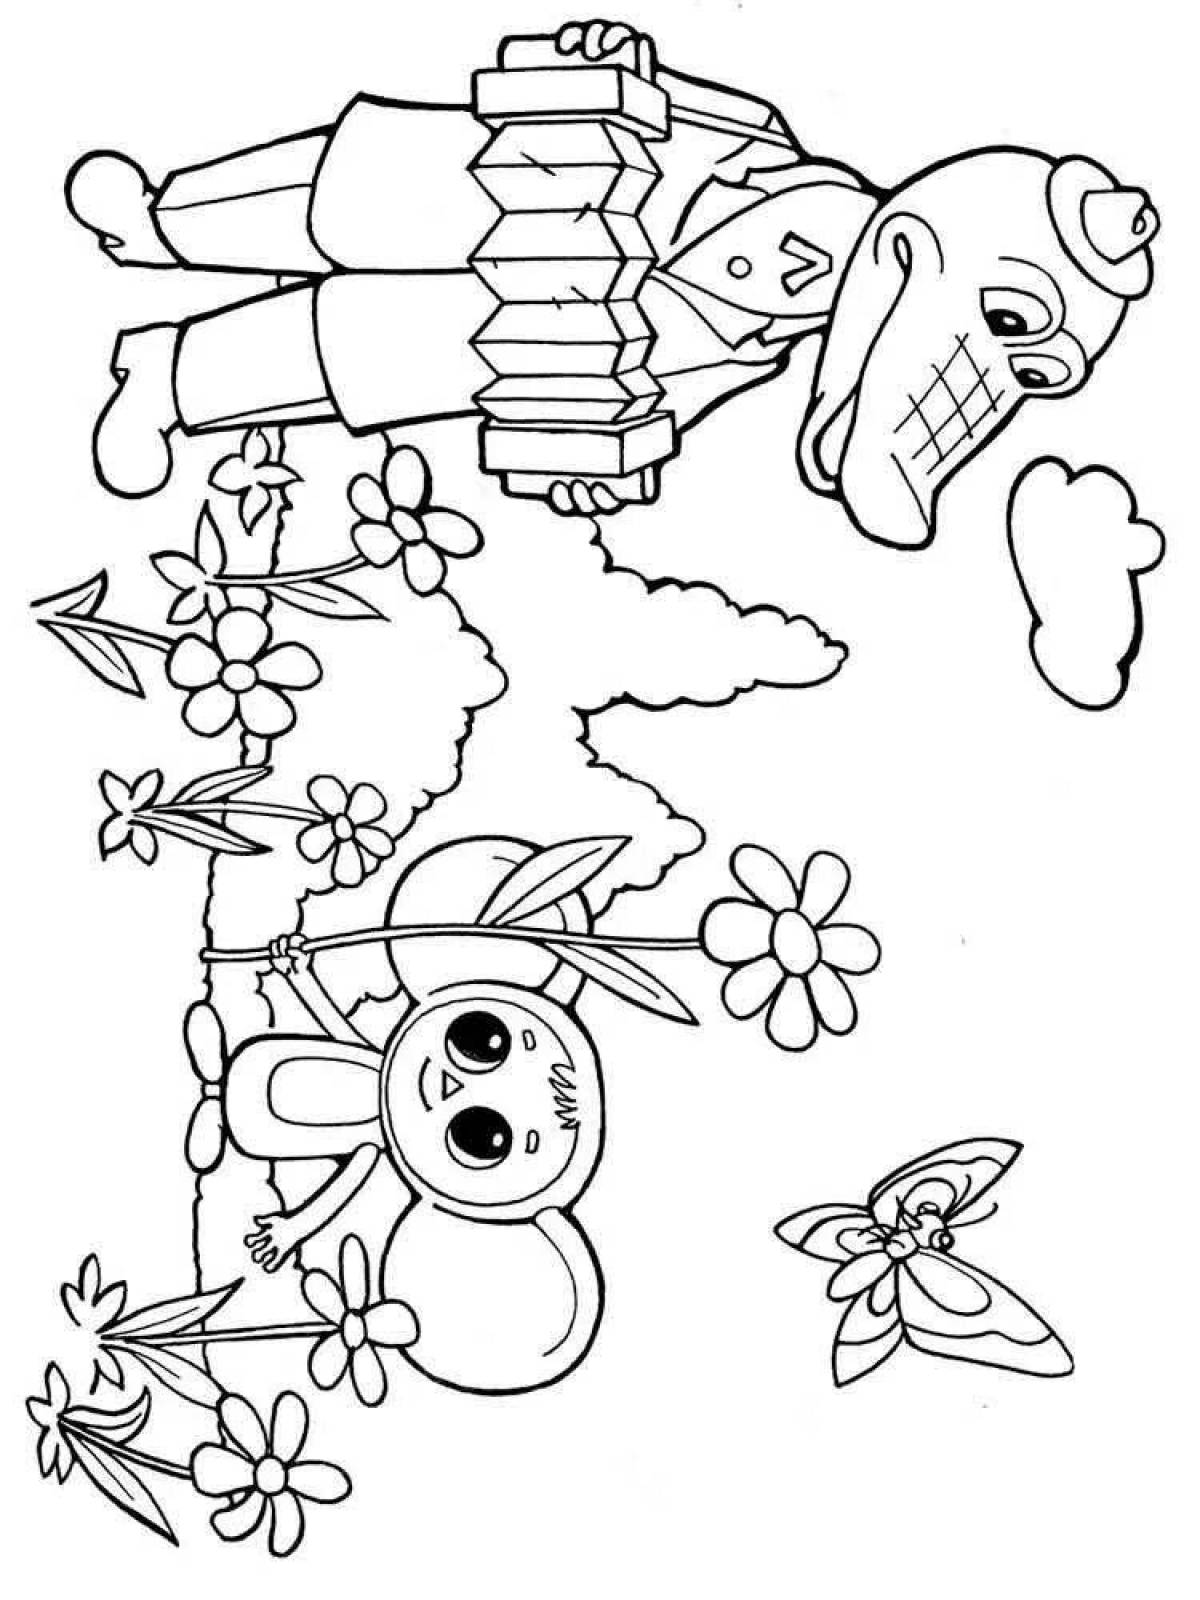 Cheburashka funny coloring